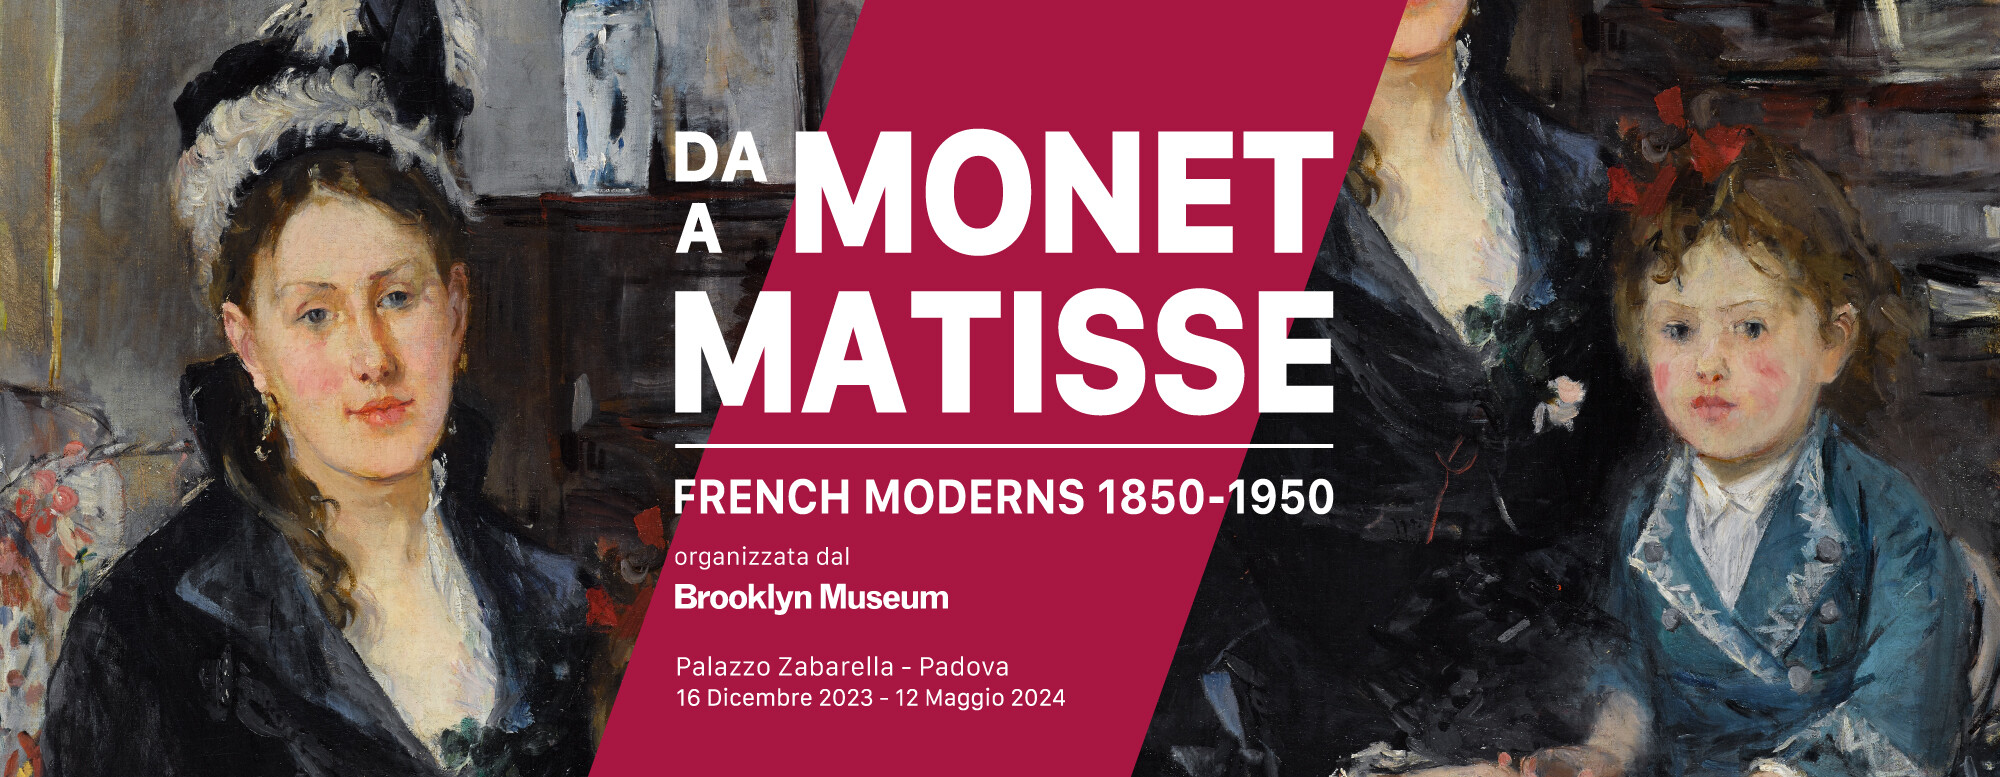 Da MONET a MATISSE French Moderns, 1850-1950  mostra a Padova,  Palazzo Zabarella,